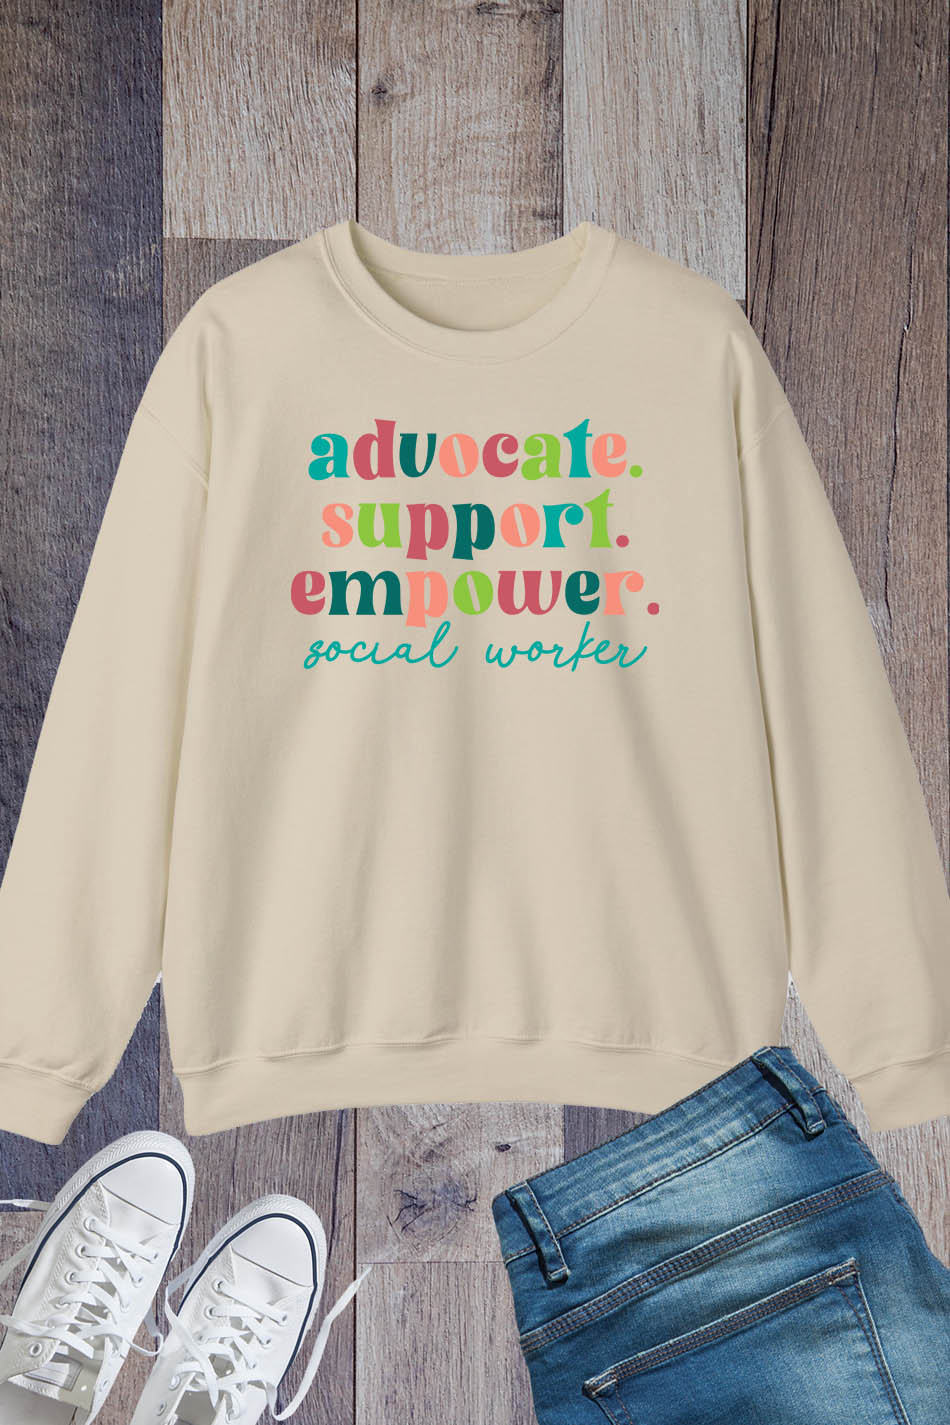 Advocate Support Empower Social Worker Sweatshirts